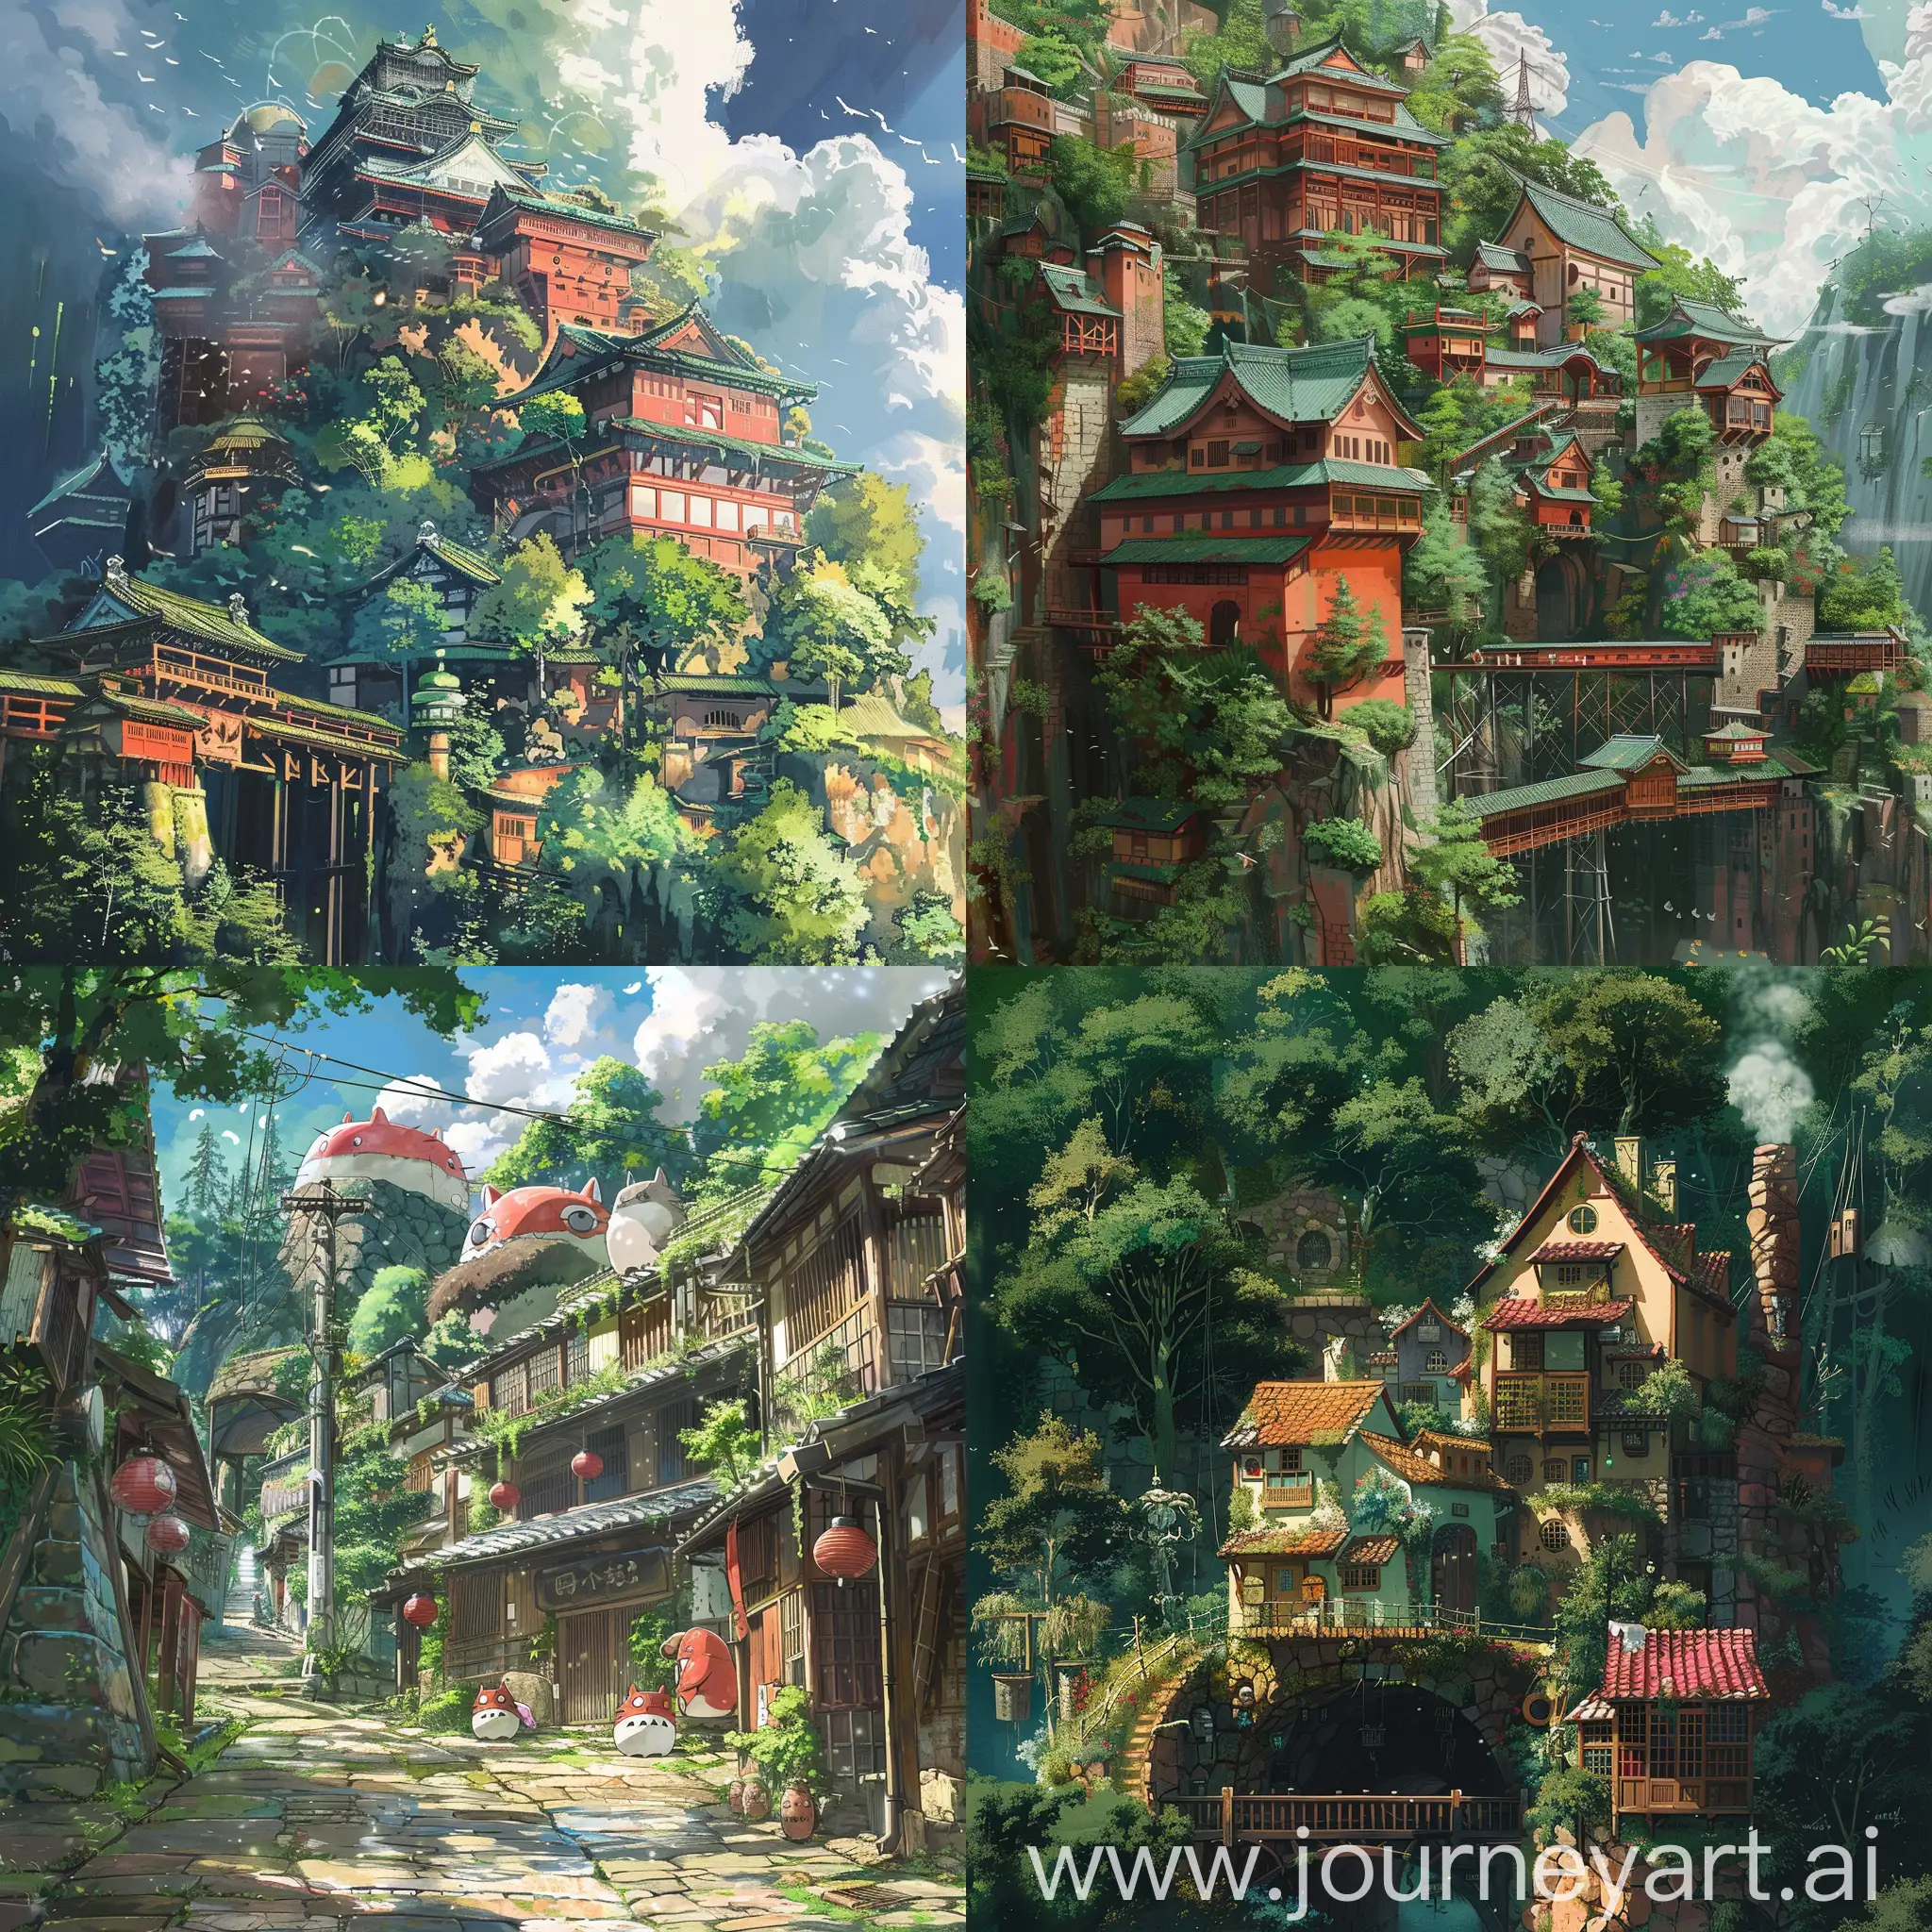 Whimsical-Fantasy-World-Inspired-by-Studio-Ghibli